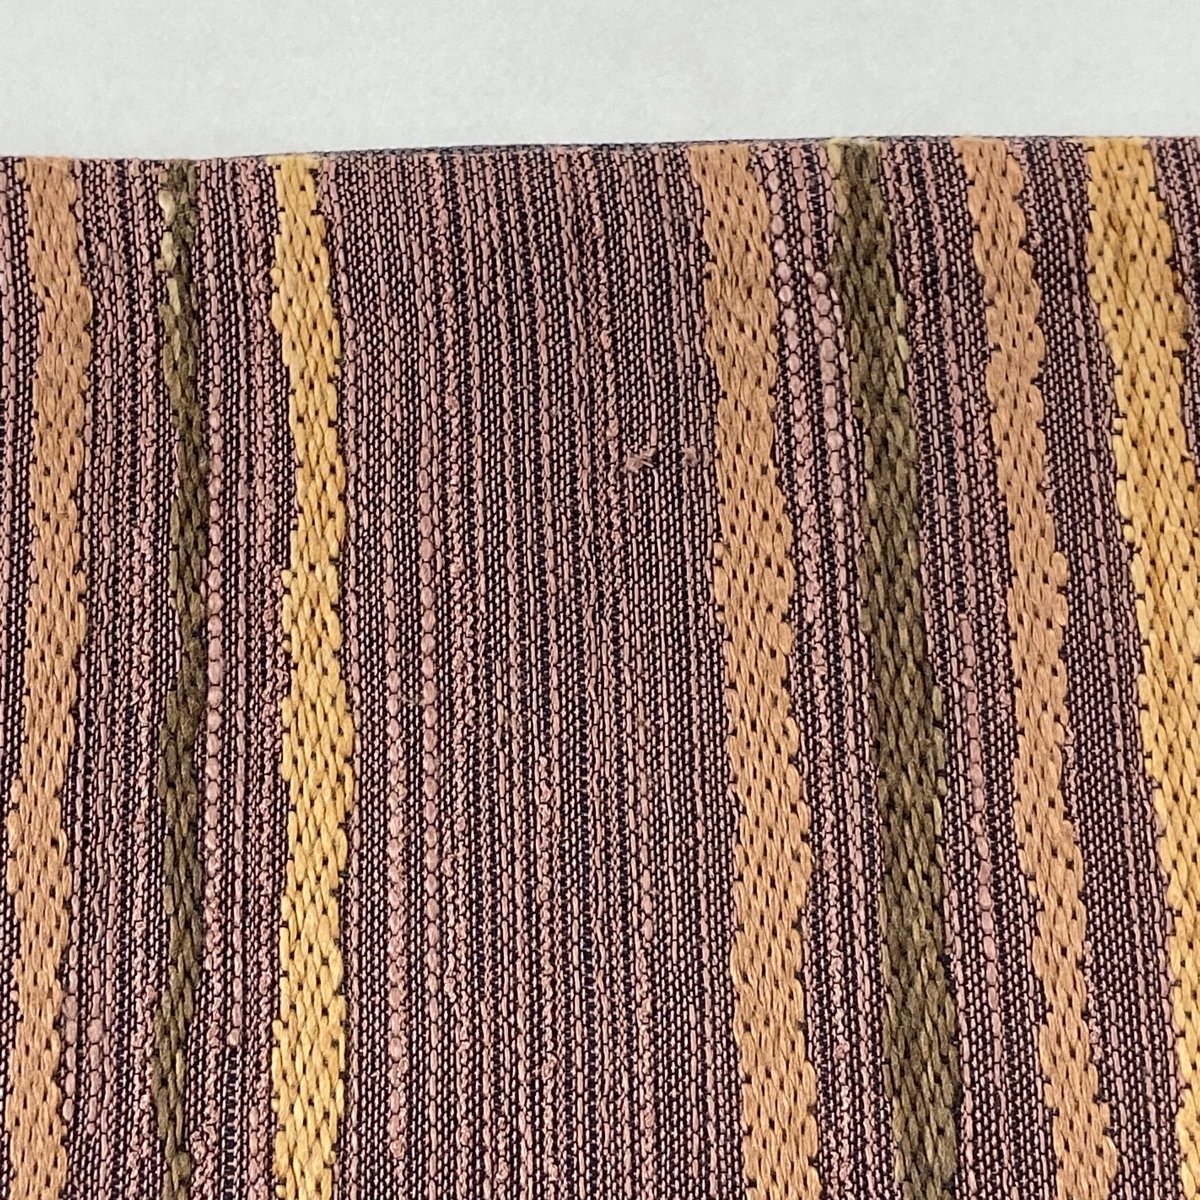 袋帯 美品 秀品 縞模様 紫 六通 正絹 【中古】_バイセル 14117_3